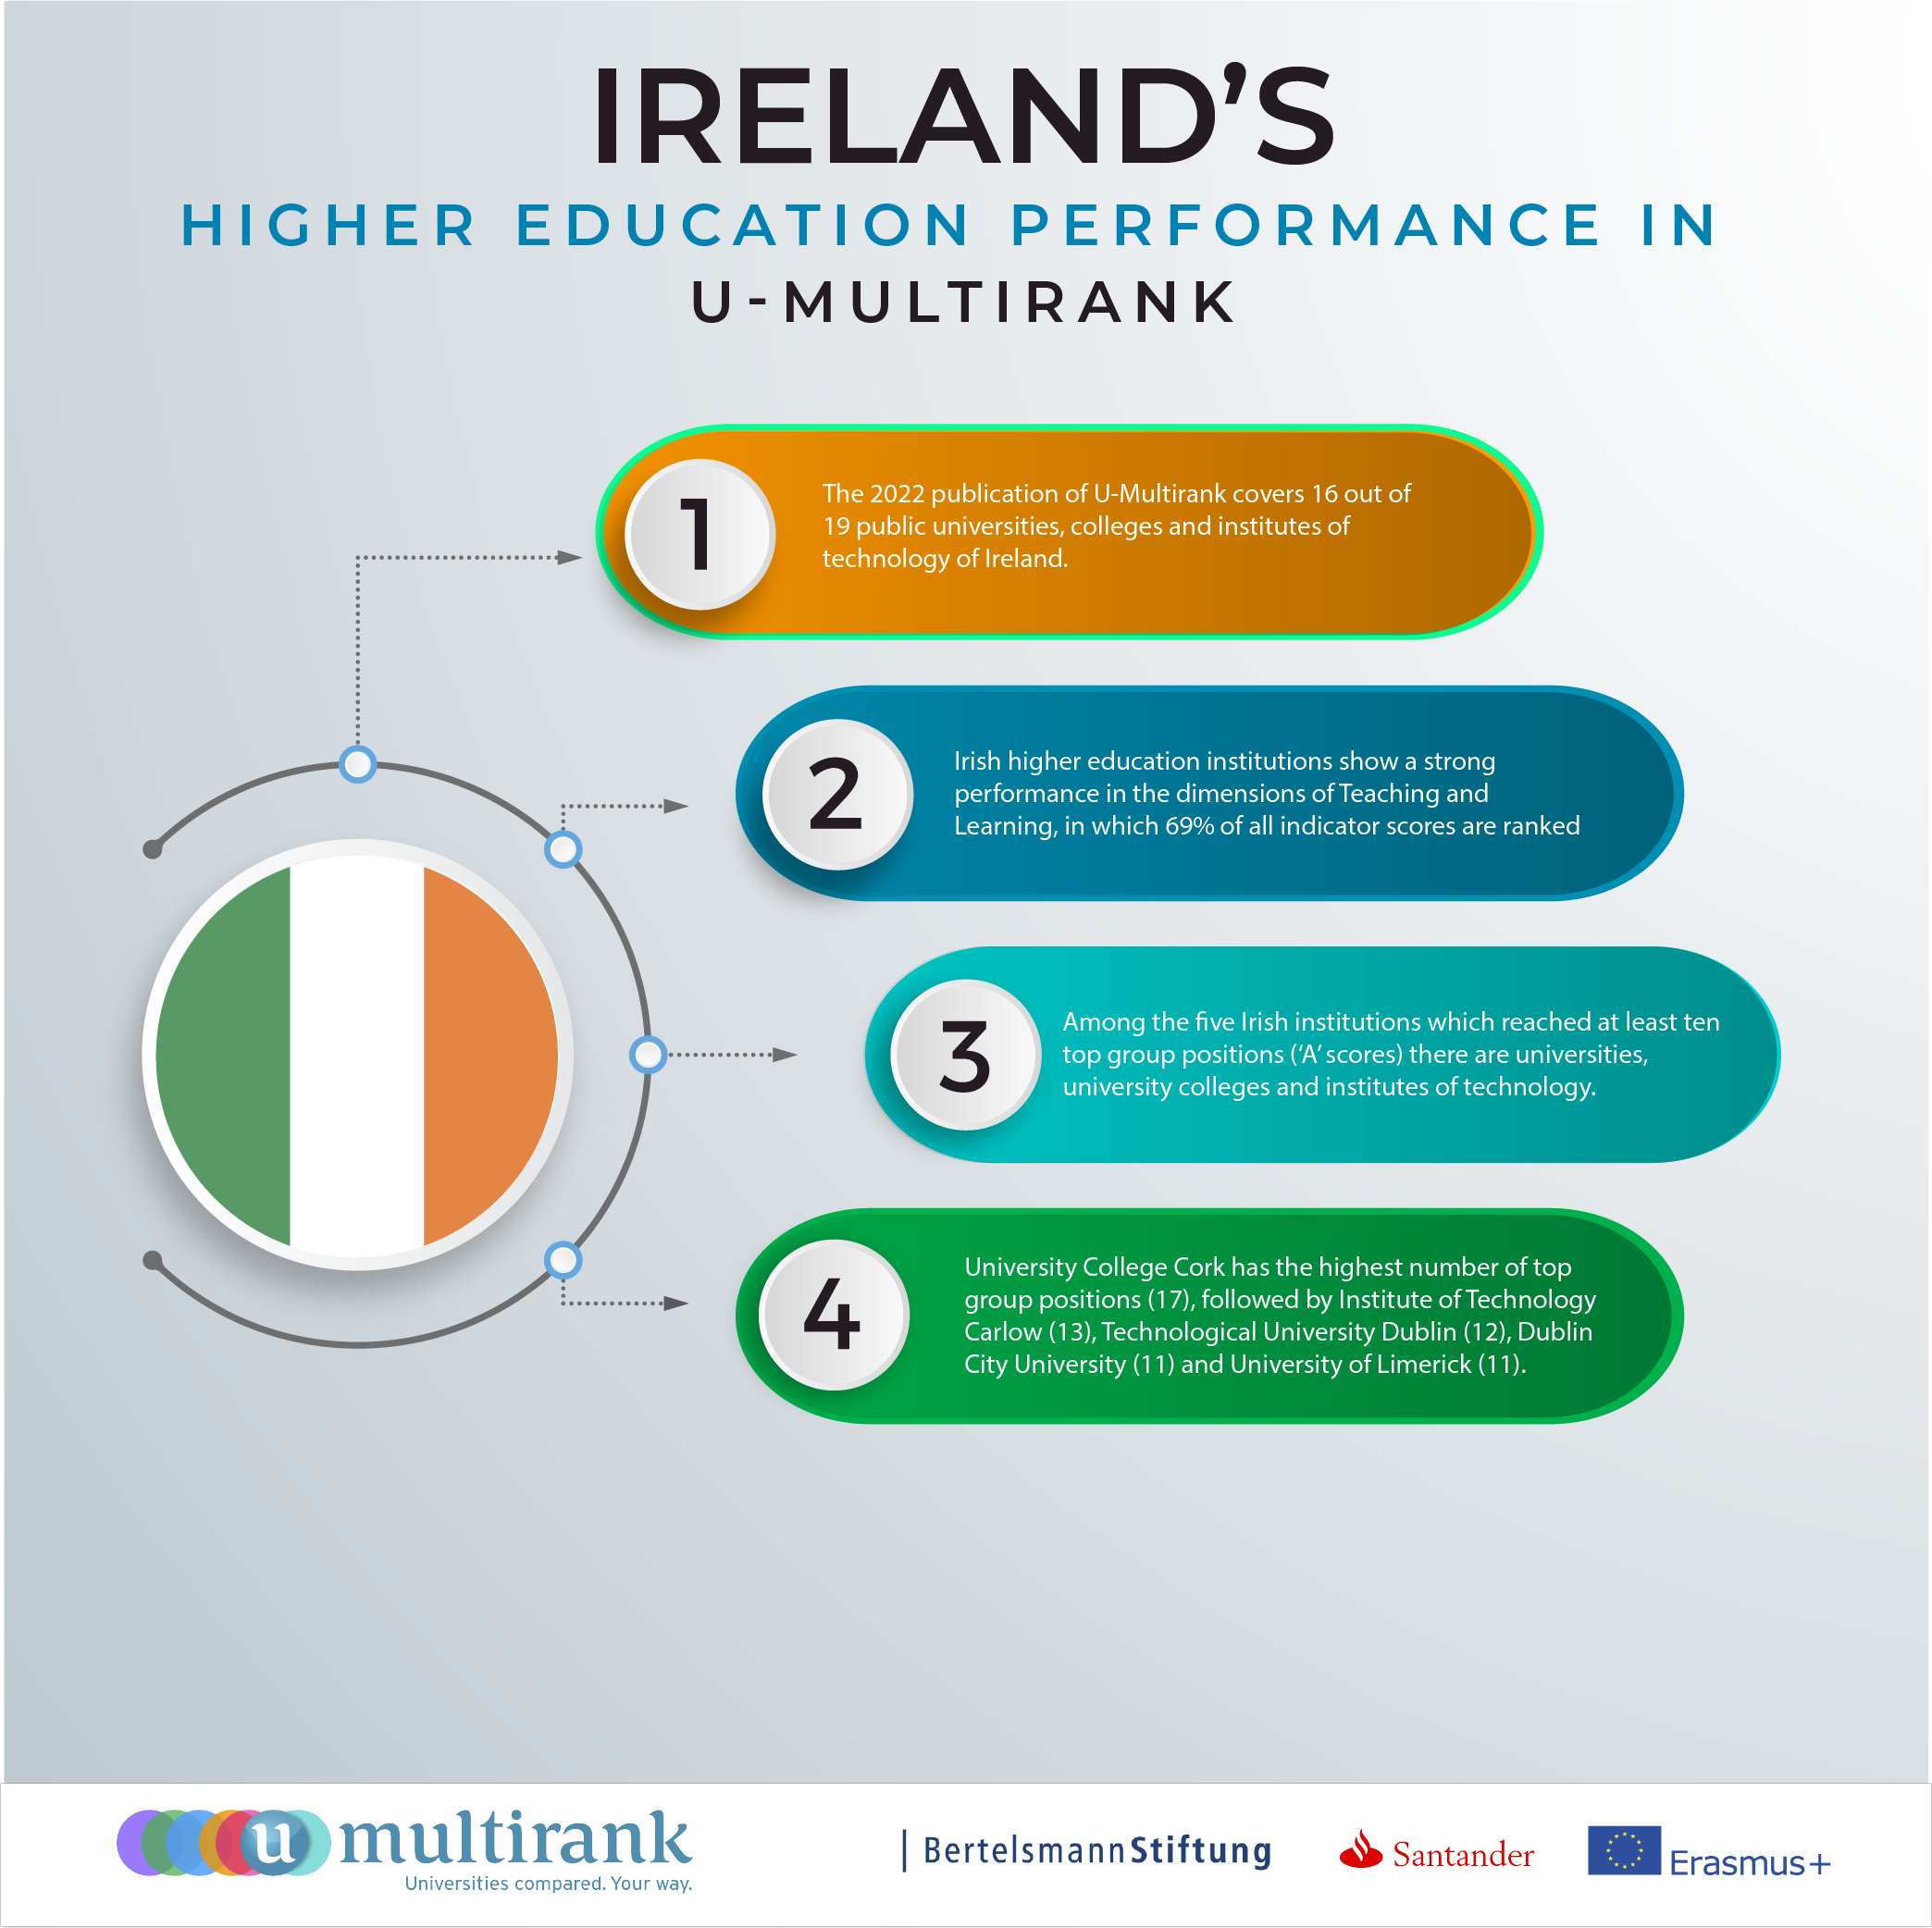 Ireland's Higher Education Performance in U-Multirank